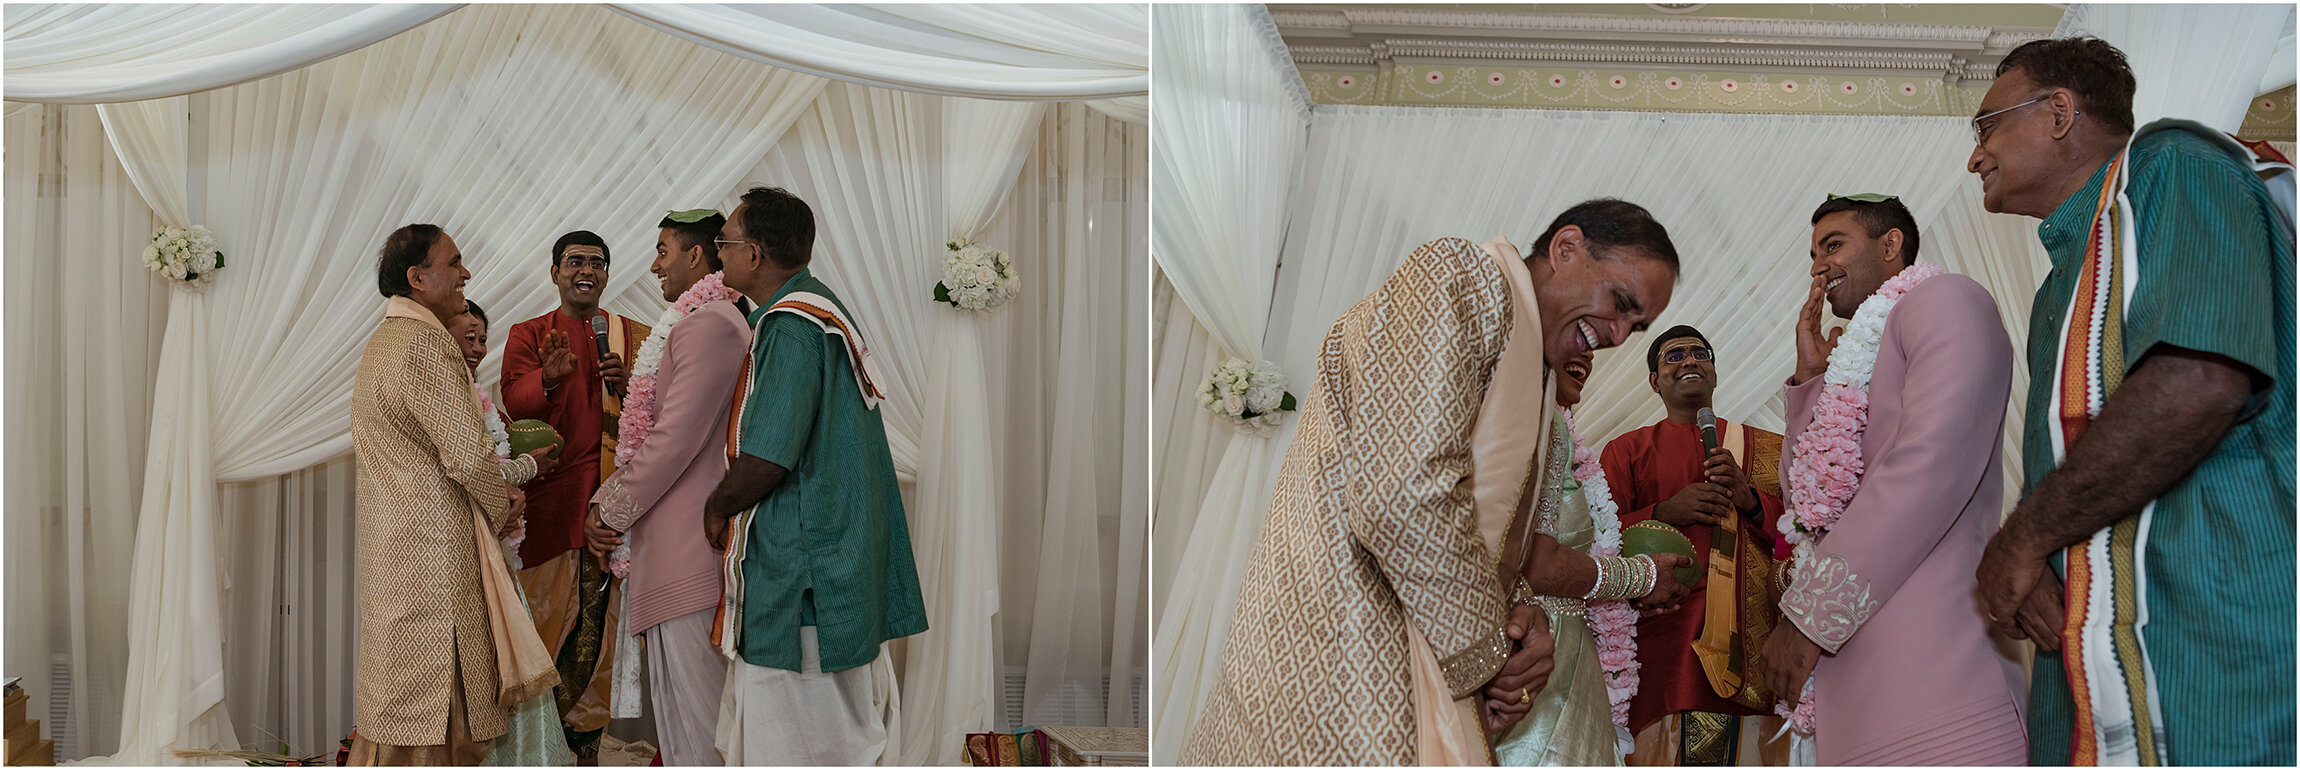 ©FianderFoto_Hindu Wedding_Bermuda_045.jpg